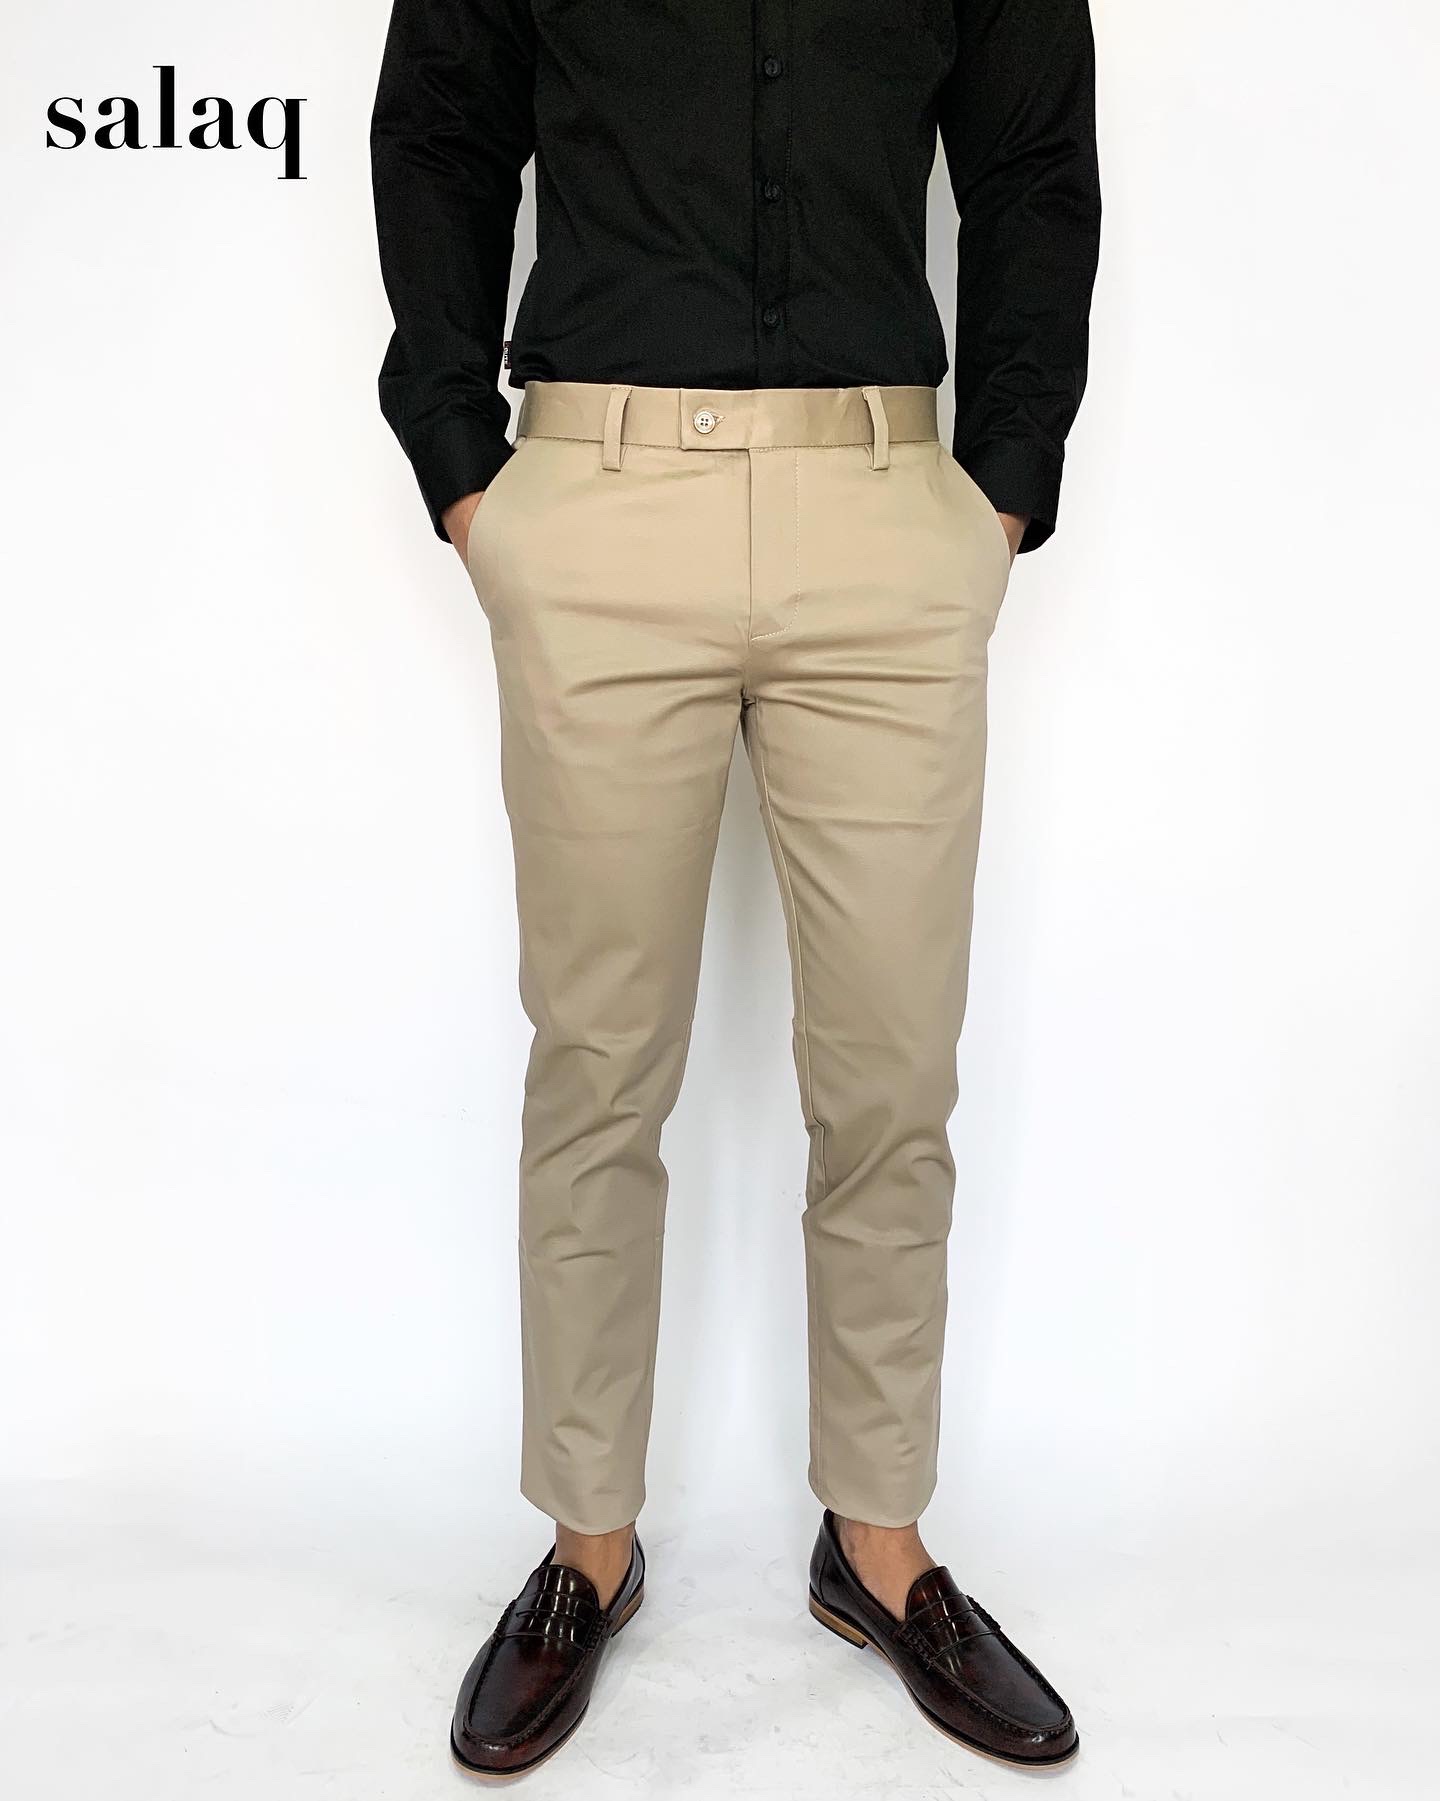 salaq [แจกโค้ดส่วนลด] กางเกงสแลคผ้ายืดขายาว กระบอกเล็กเข้ารูป กางเกงขายาวผู้ชาย กางเกงทำงาน กางเกงสแล็ค สีครีม